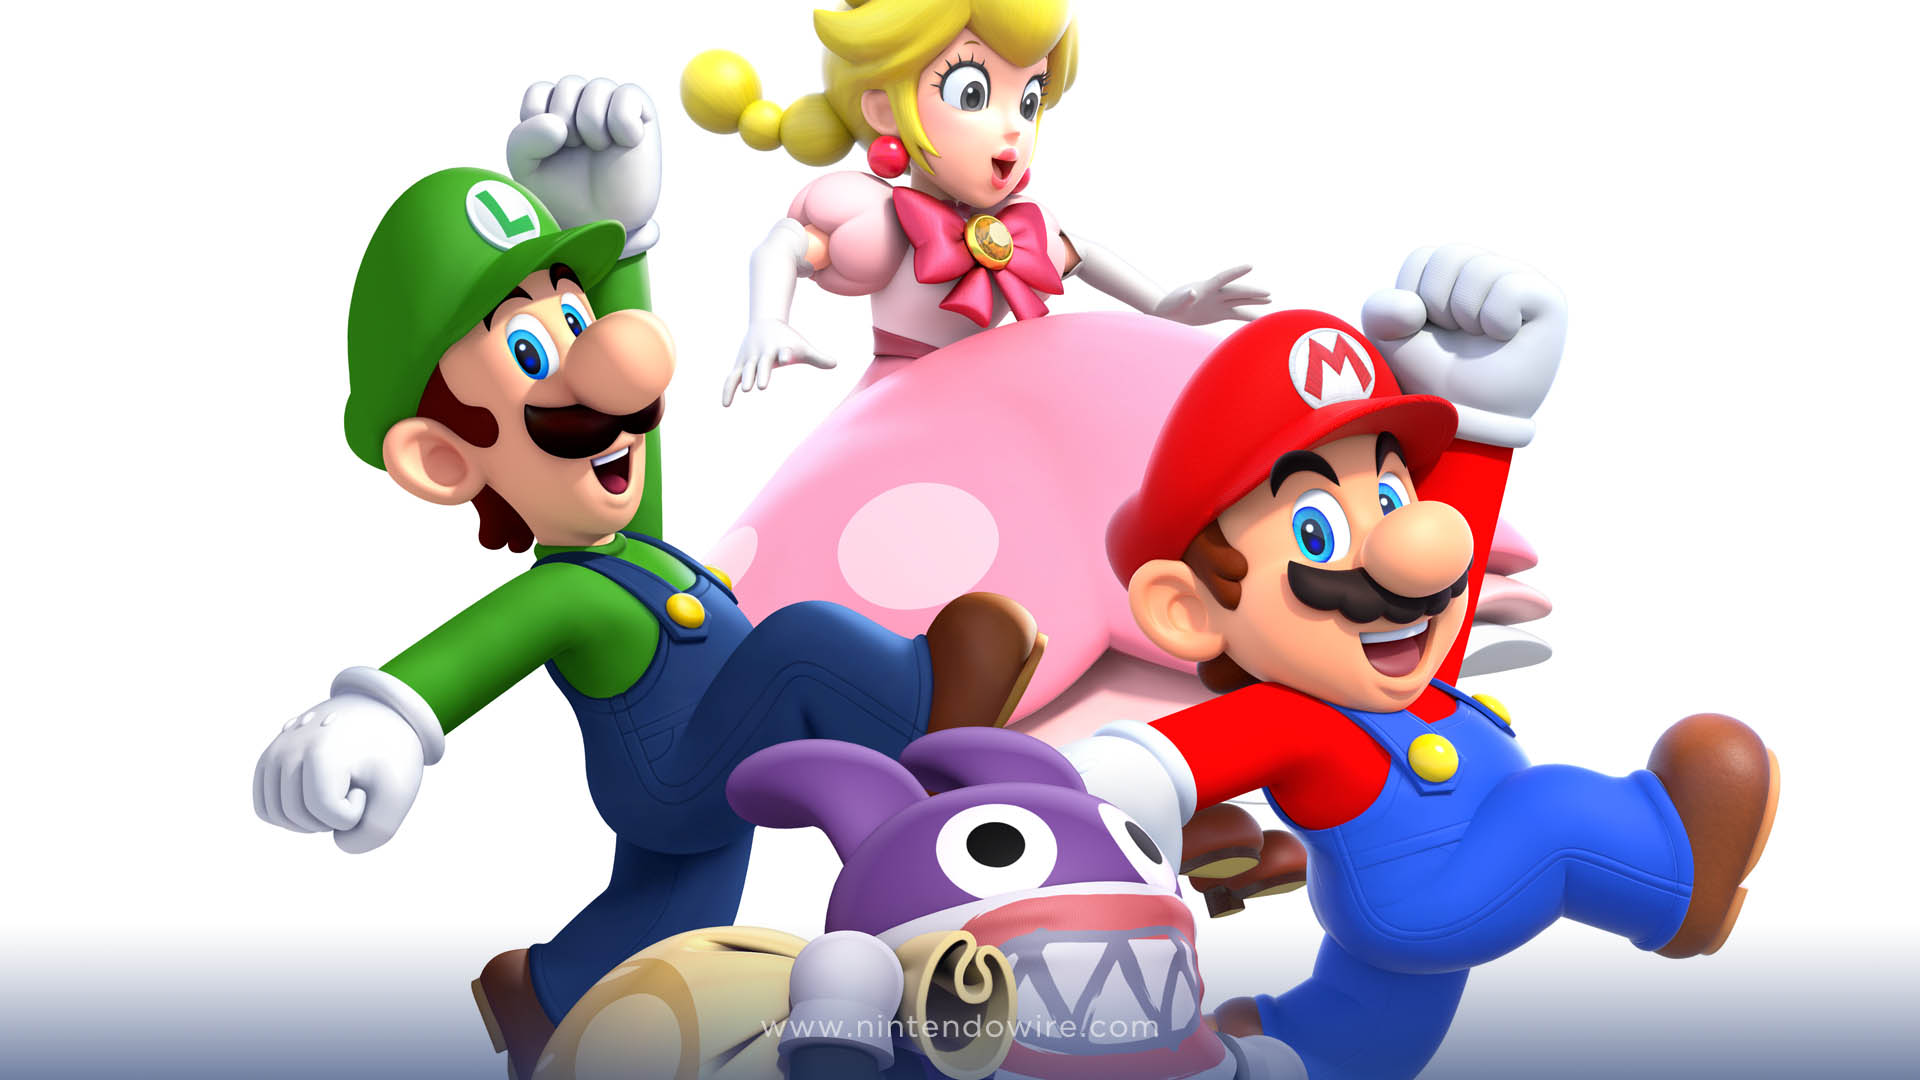 Mario brothers. Super Mario БРОС. New супер Марио БРОС. New super Mario Bros. U Deluxe. Супер Марио БРОС Луиджи.